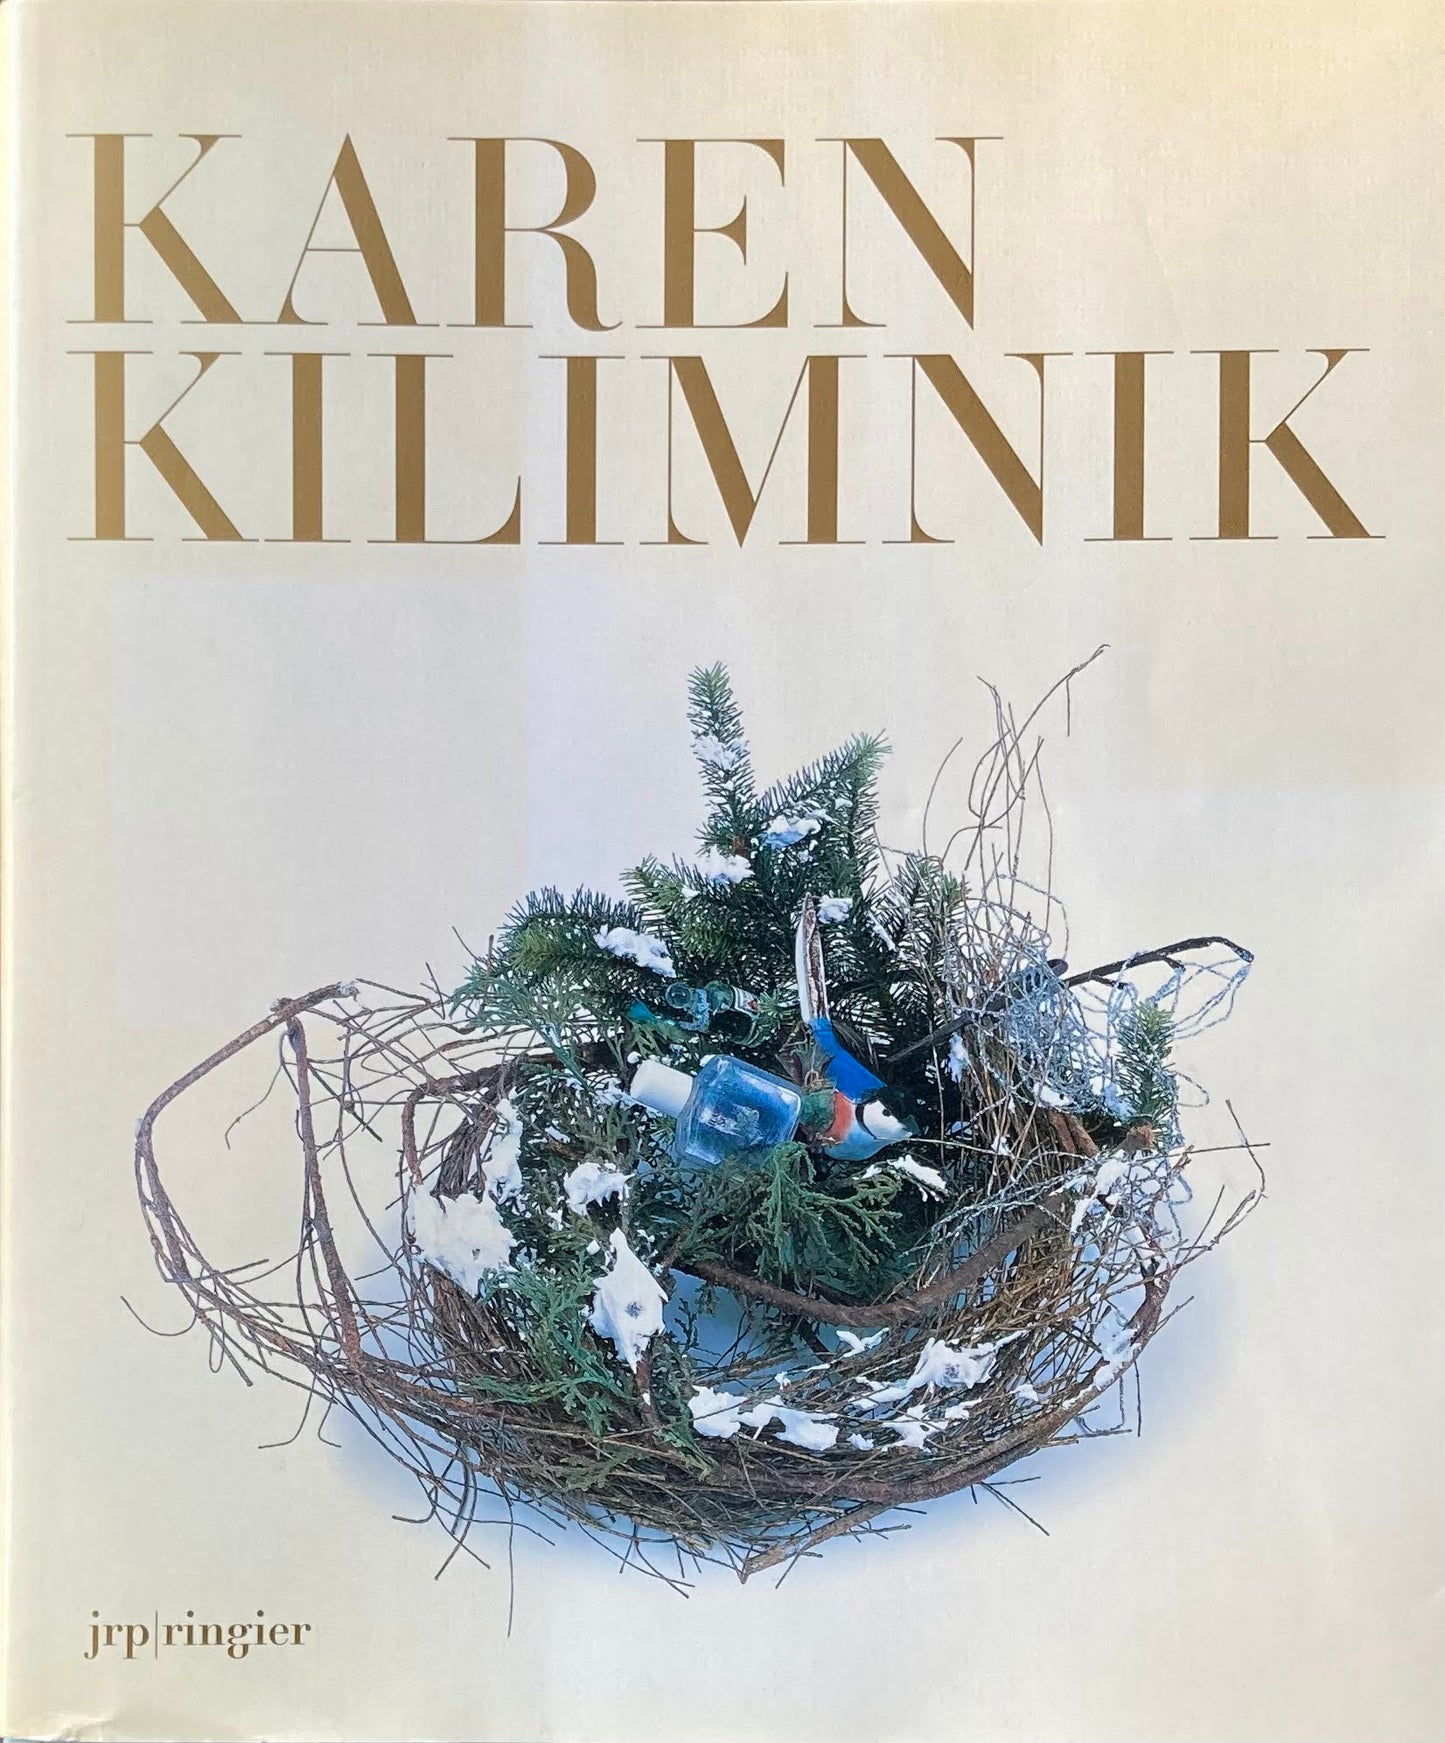 KAREN KILIMNIK 365 days in the year of Karen